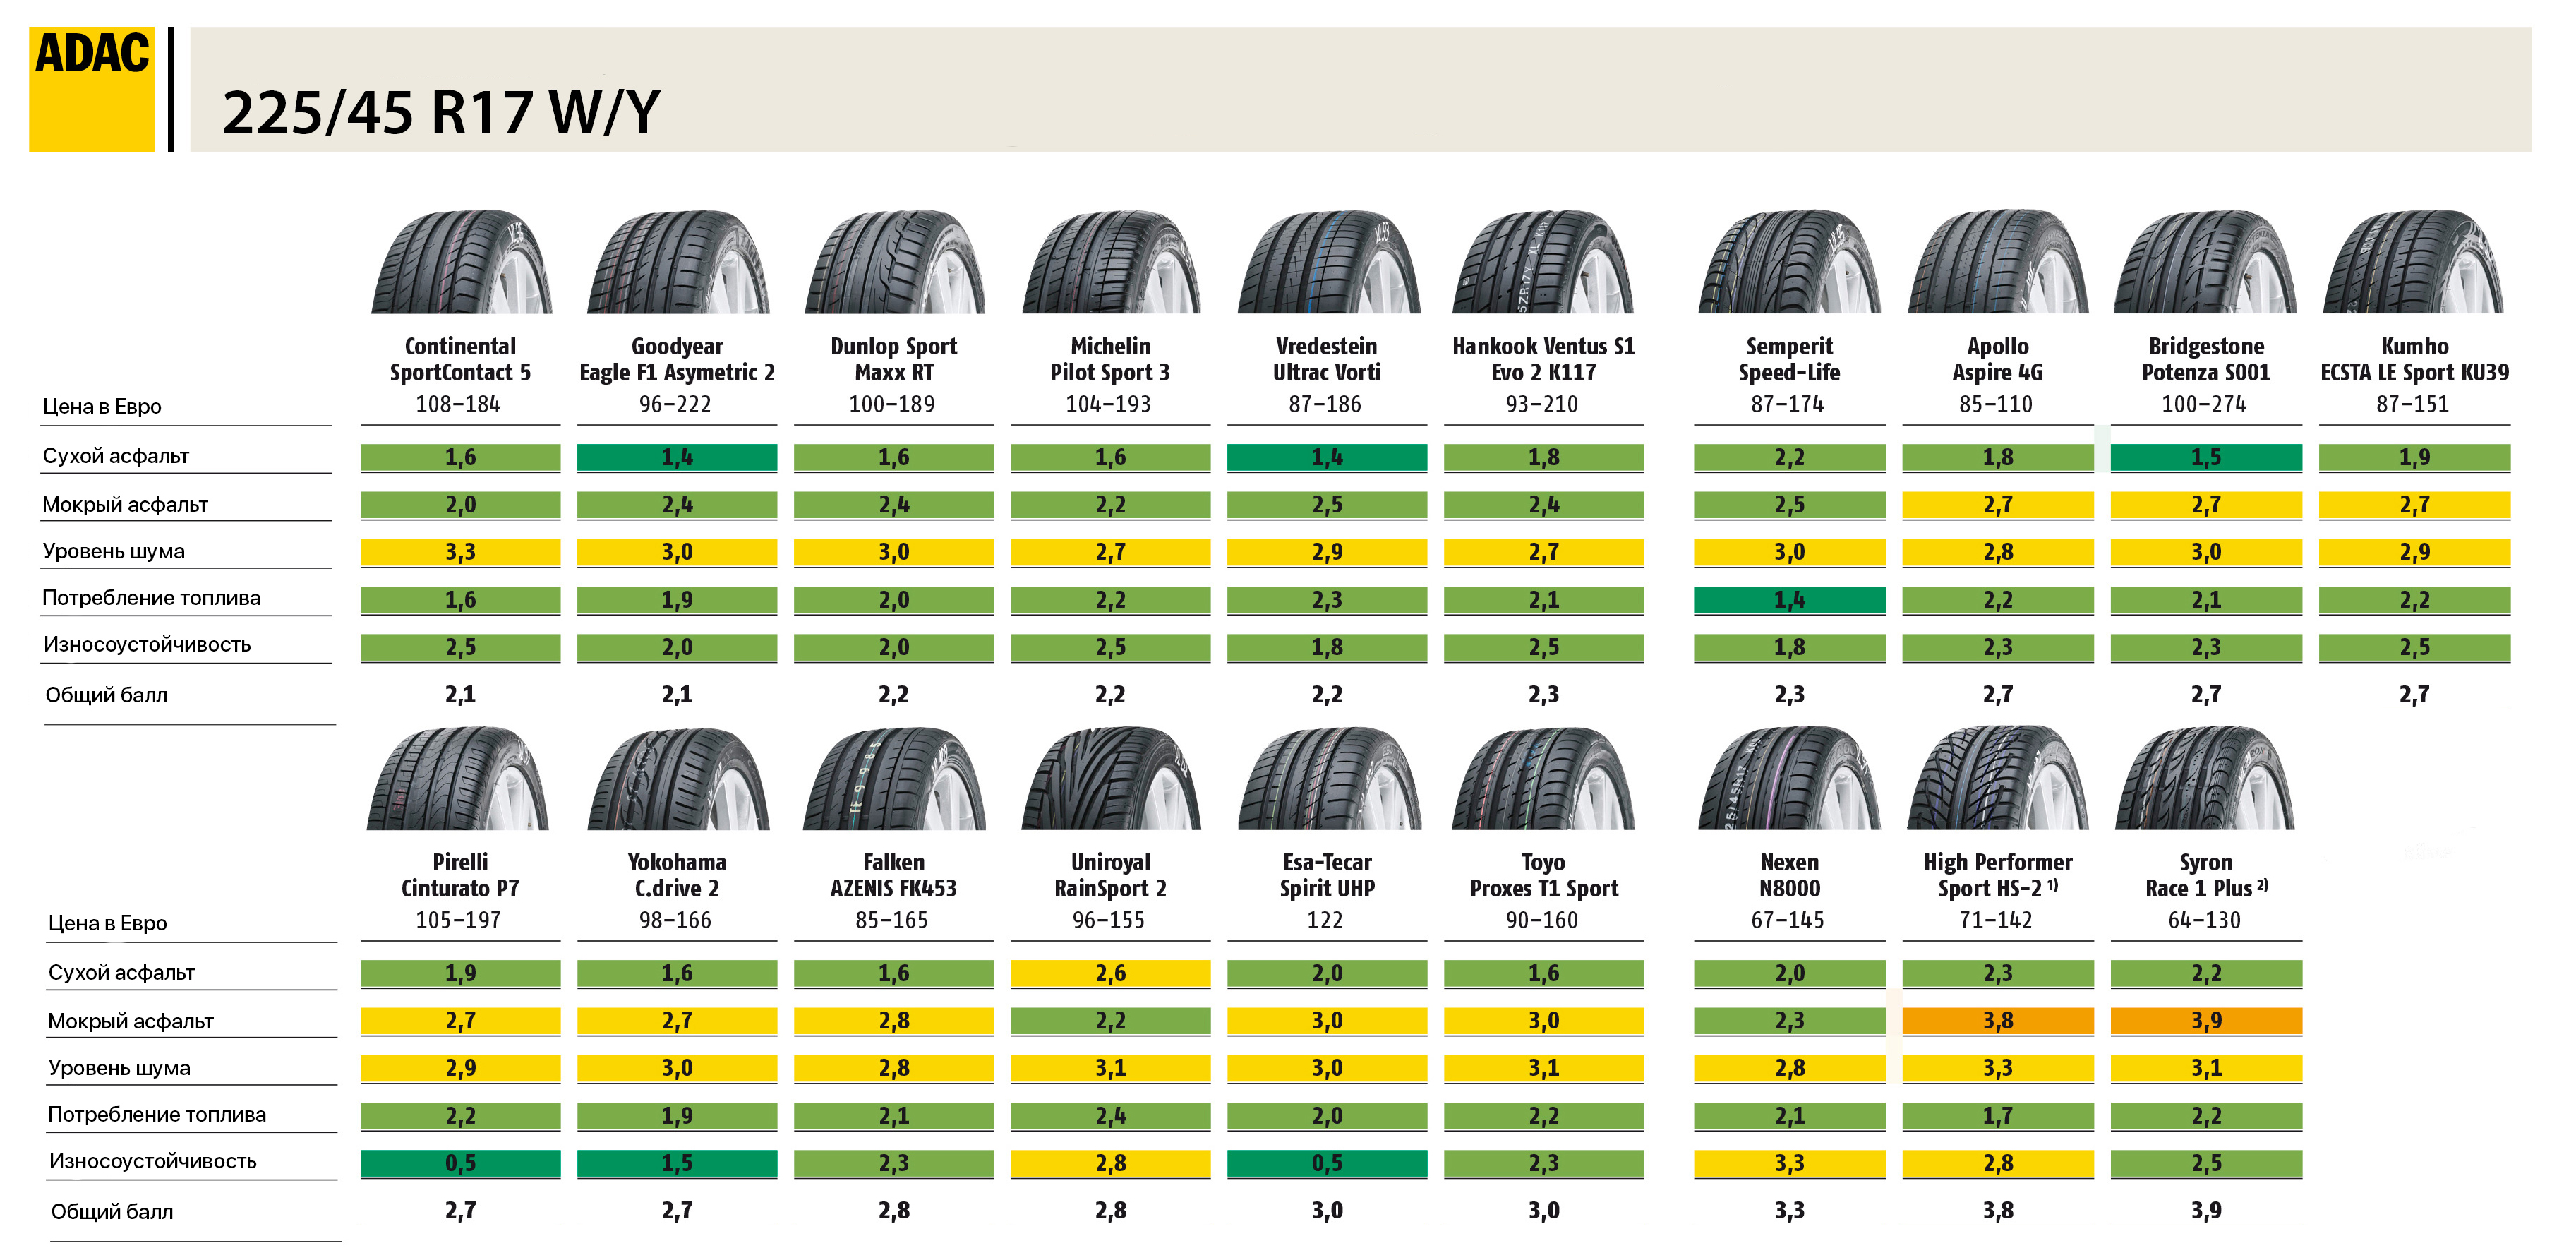 Итоги теста летних шин в двух размерах 2013-2